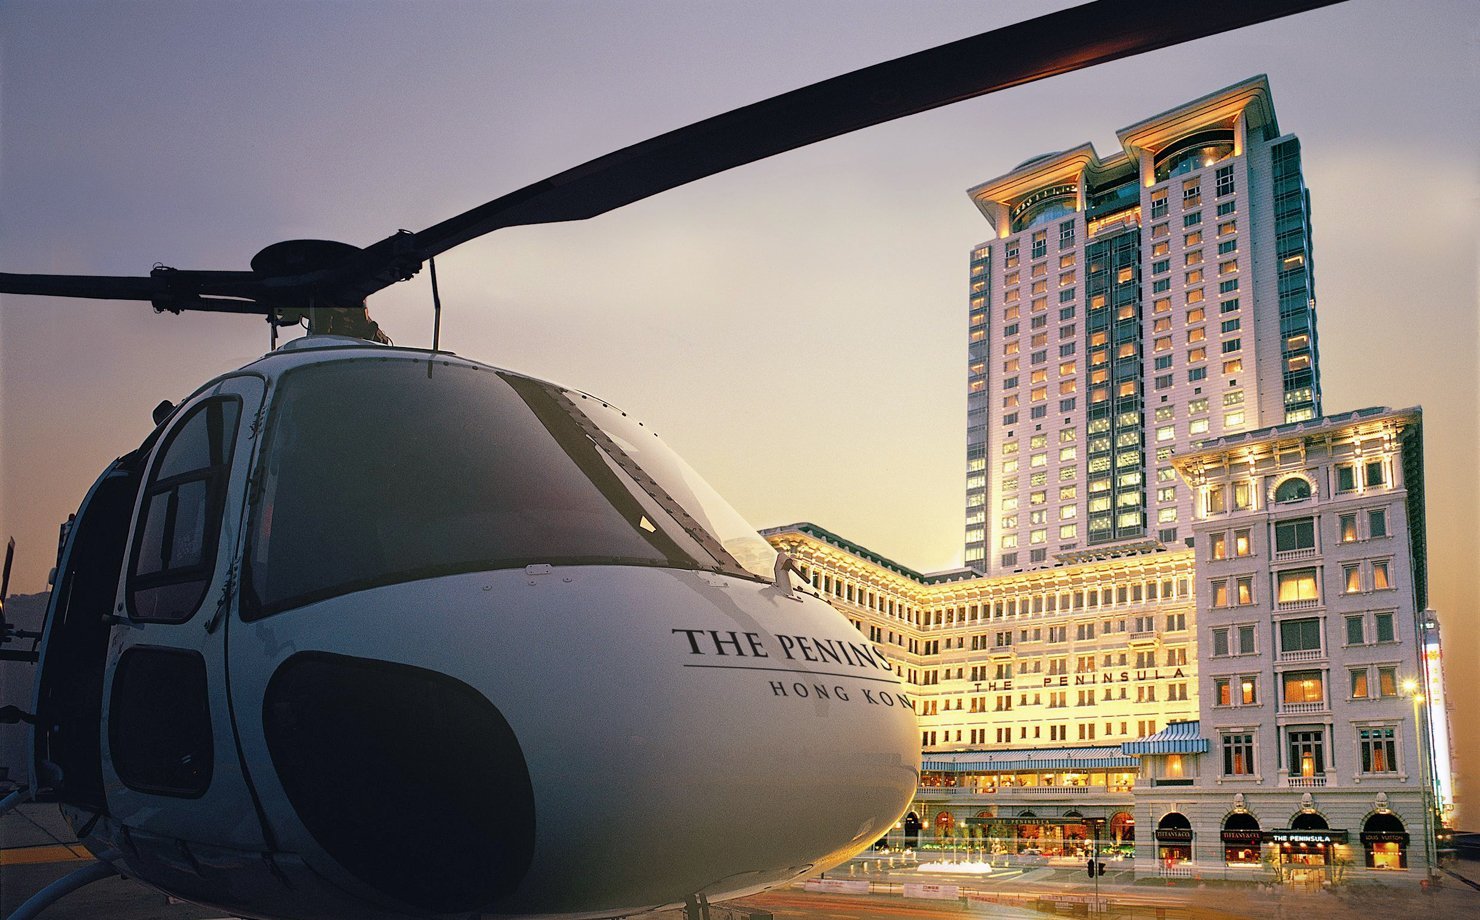 Helicóptero da rede de hotéis Peninsula, em Hong Kong